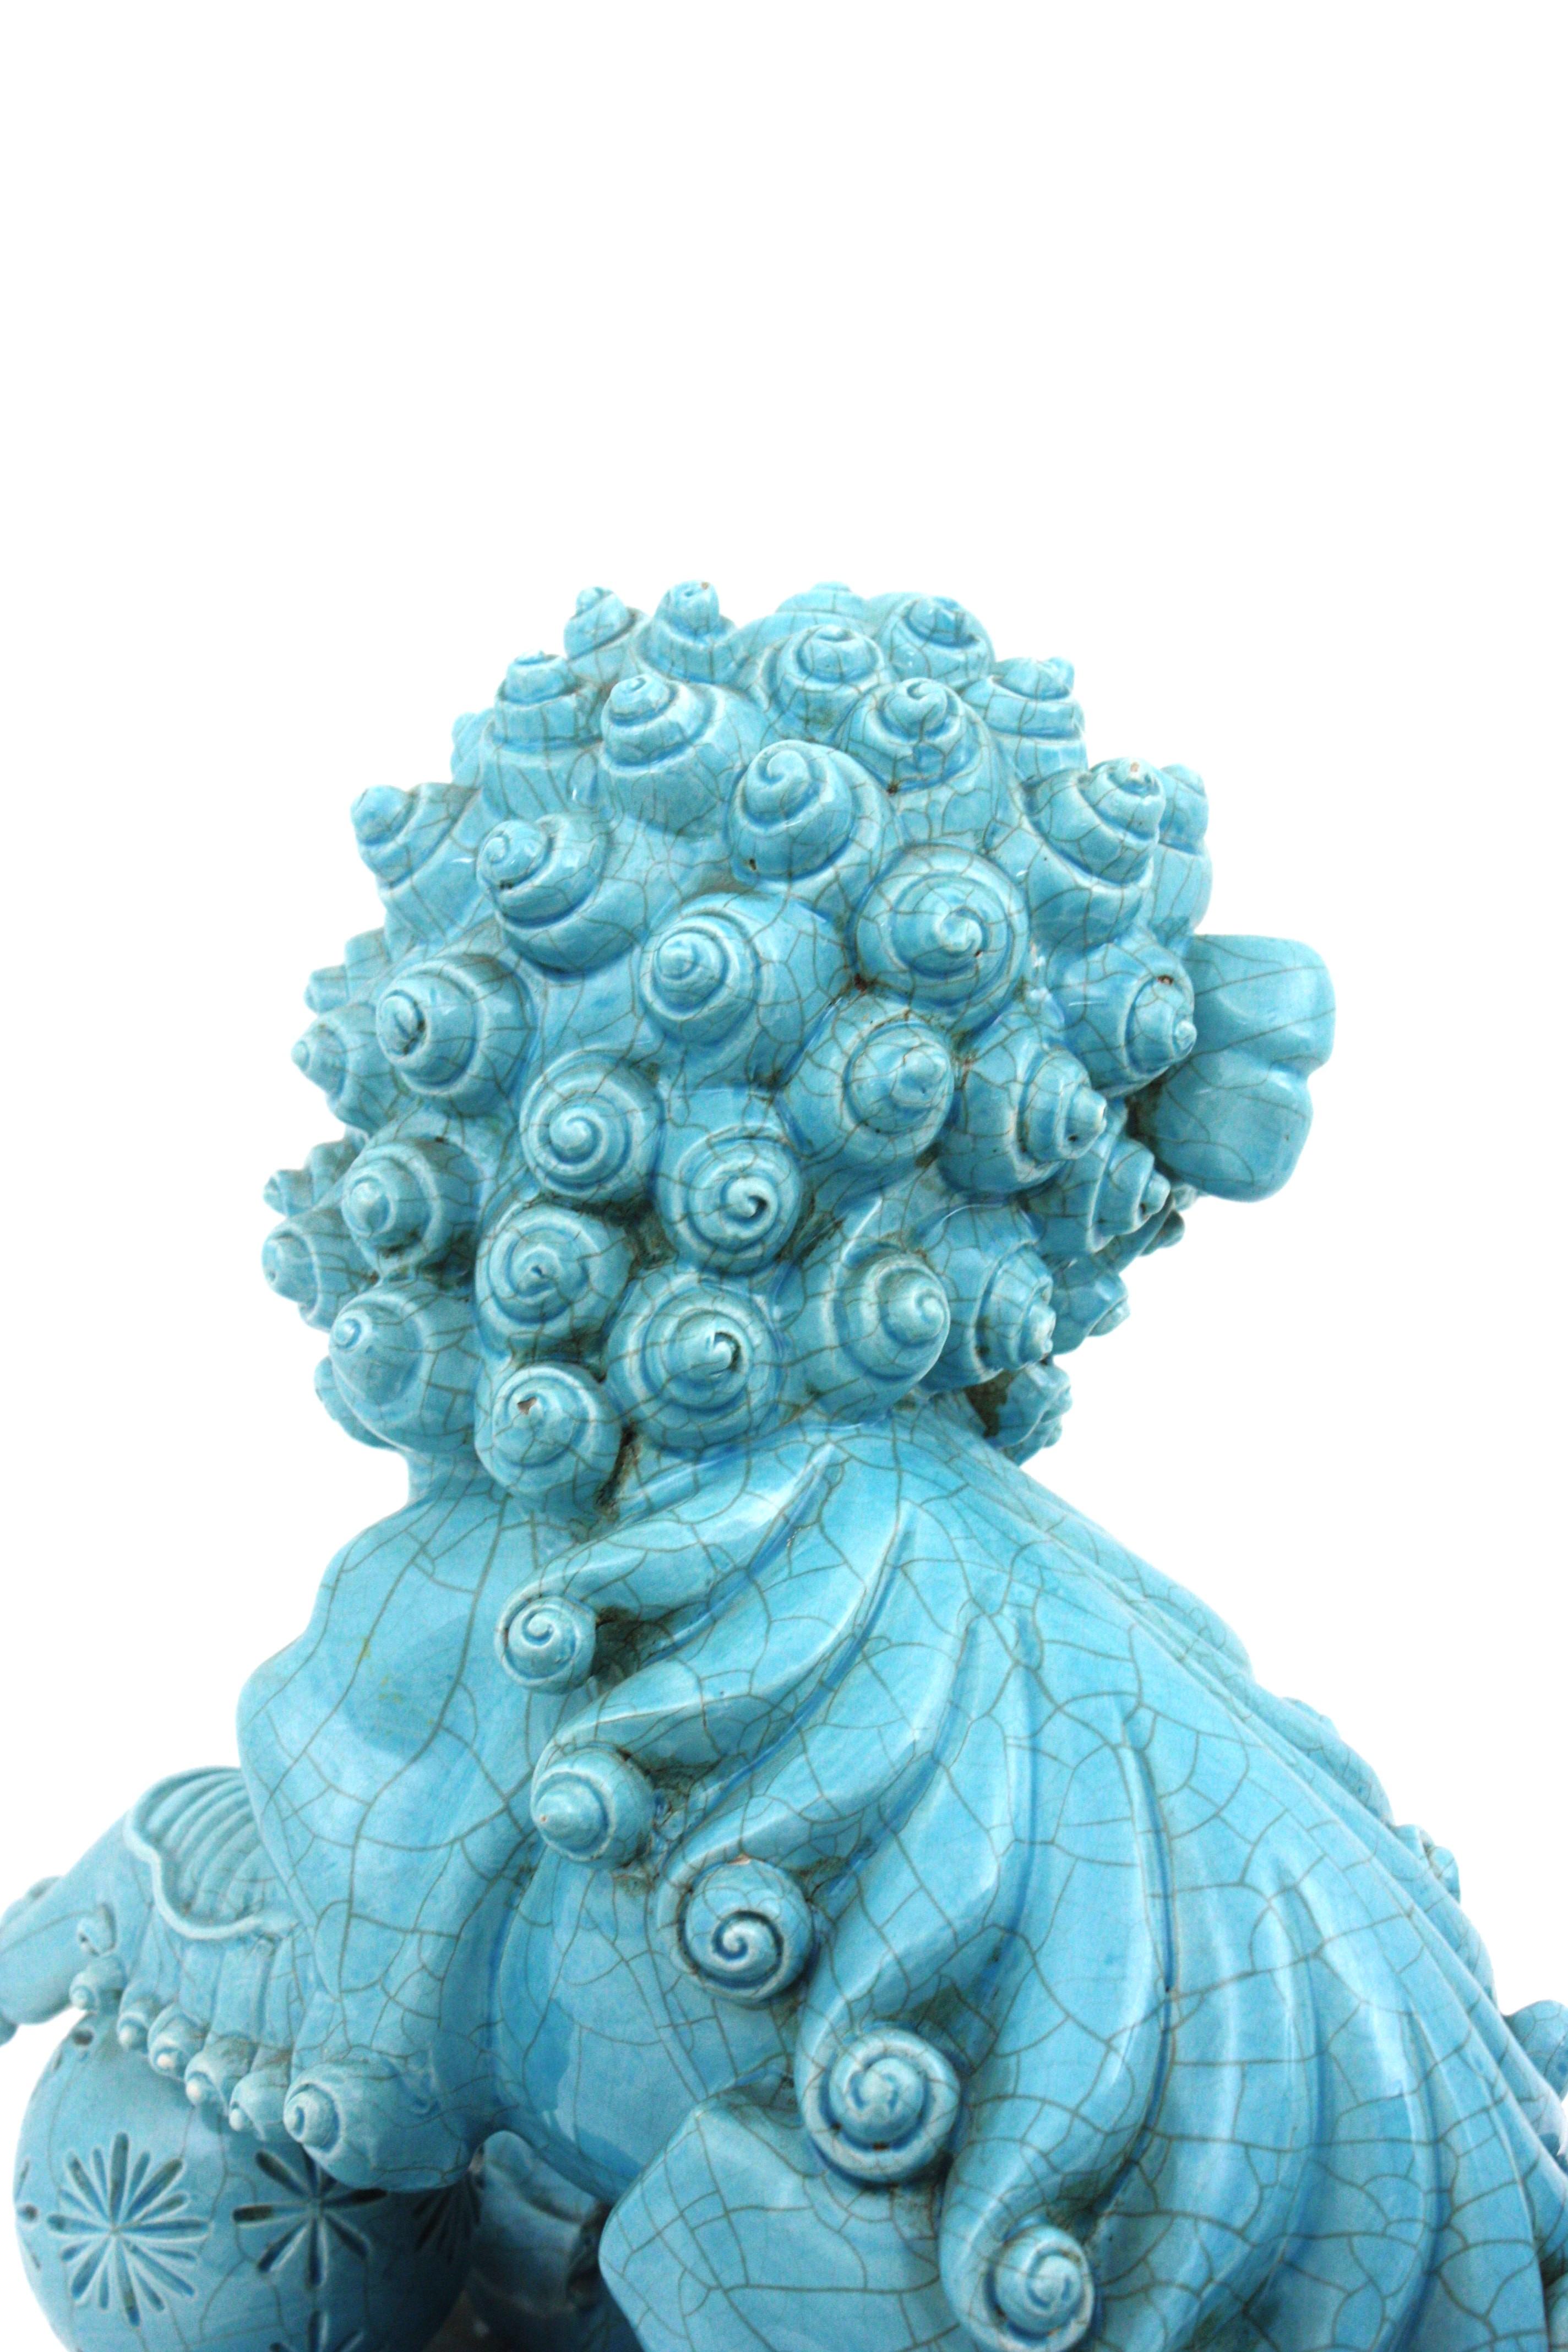 Large Foo Dog Guardian Lion Blue Porcelain Sculpture For Sale 1